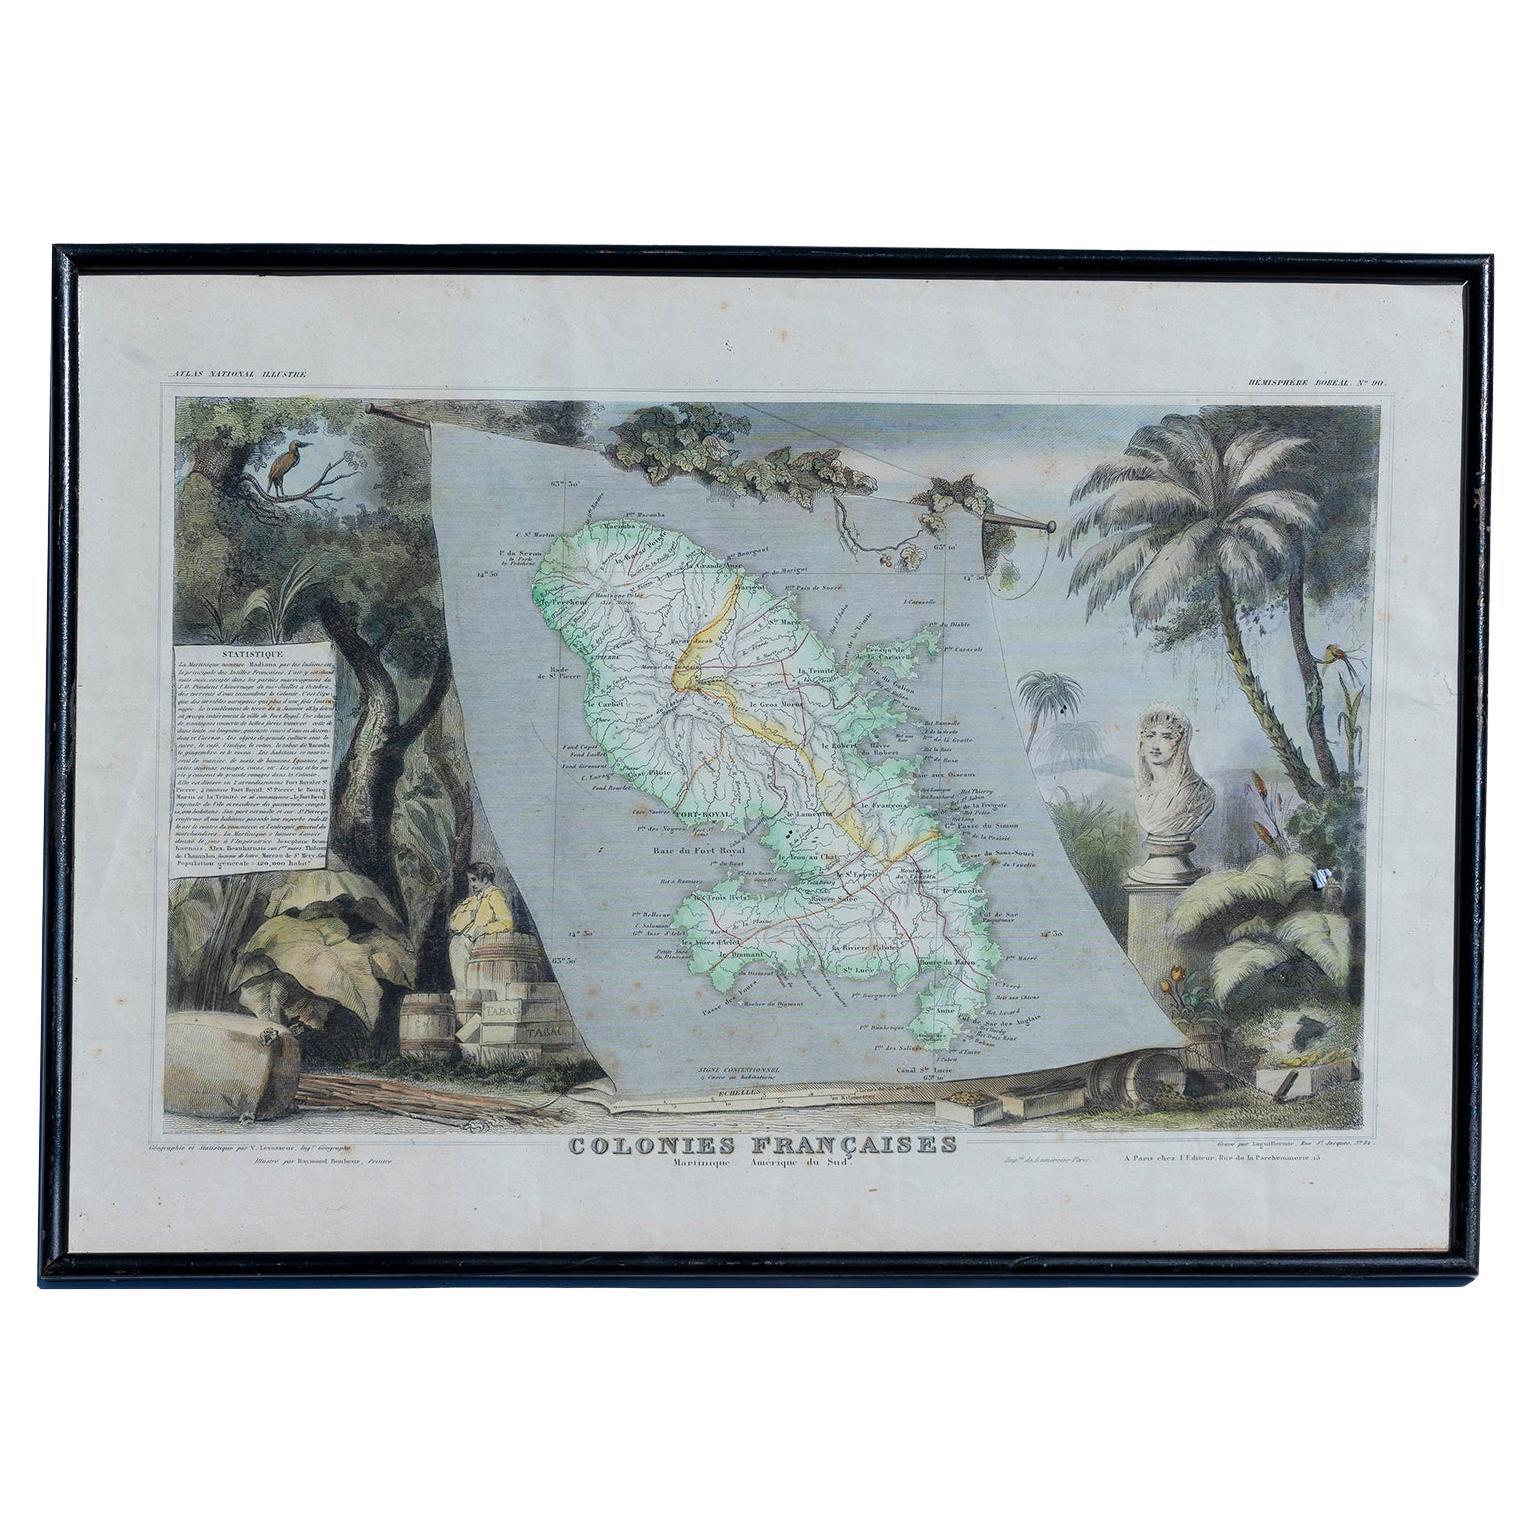 Map Colonies Francaises Martinique, 1845